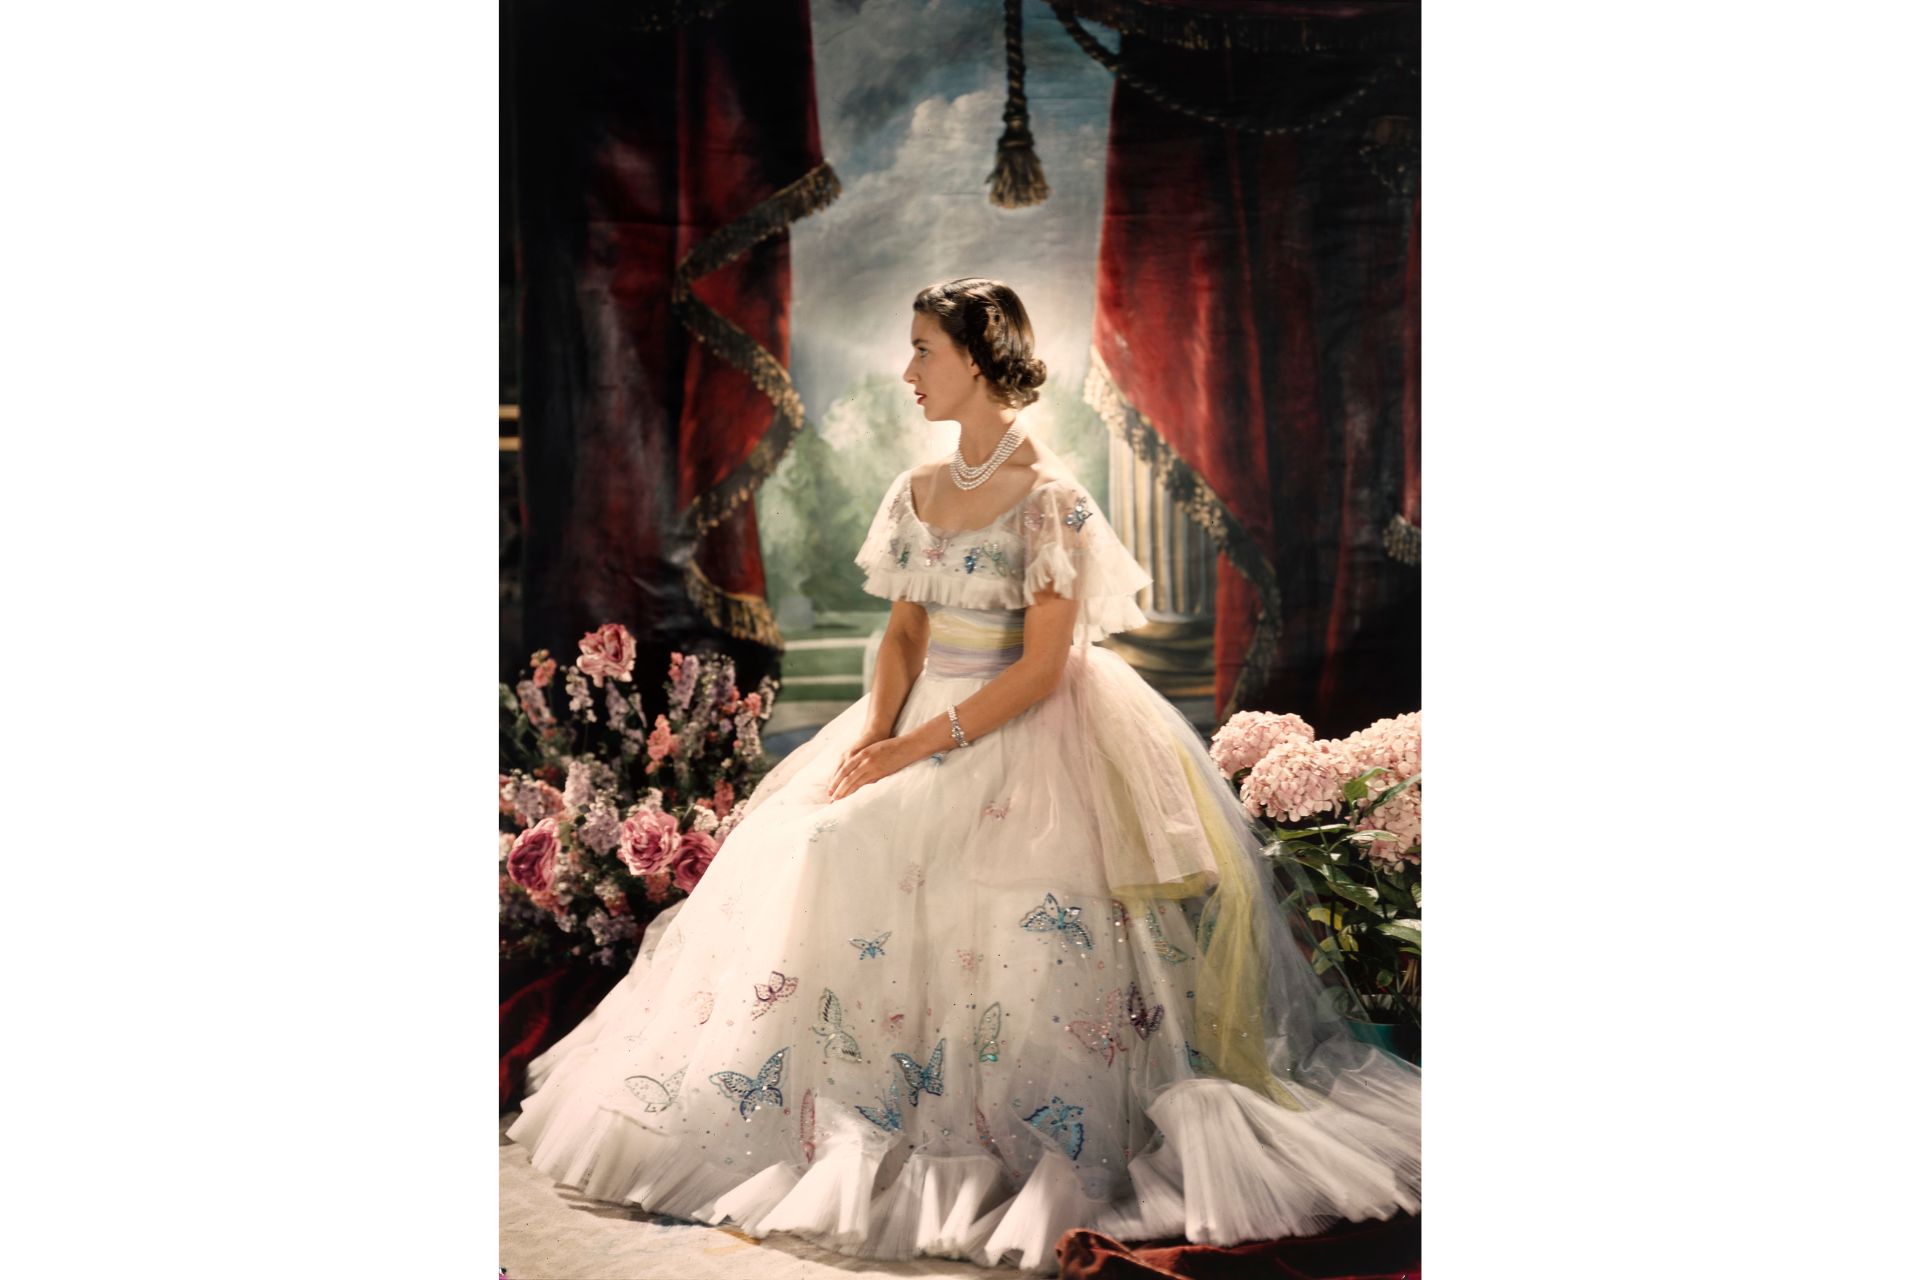 A photograph of Princess Margaret